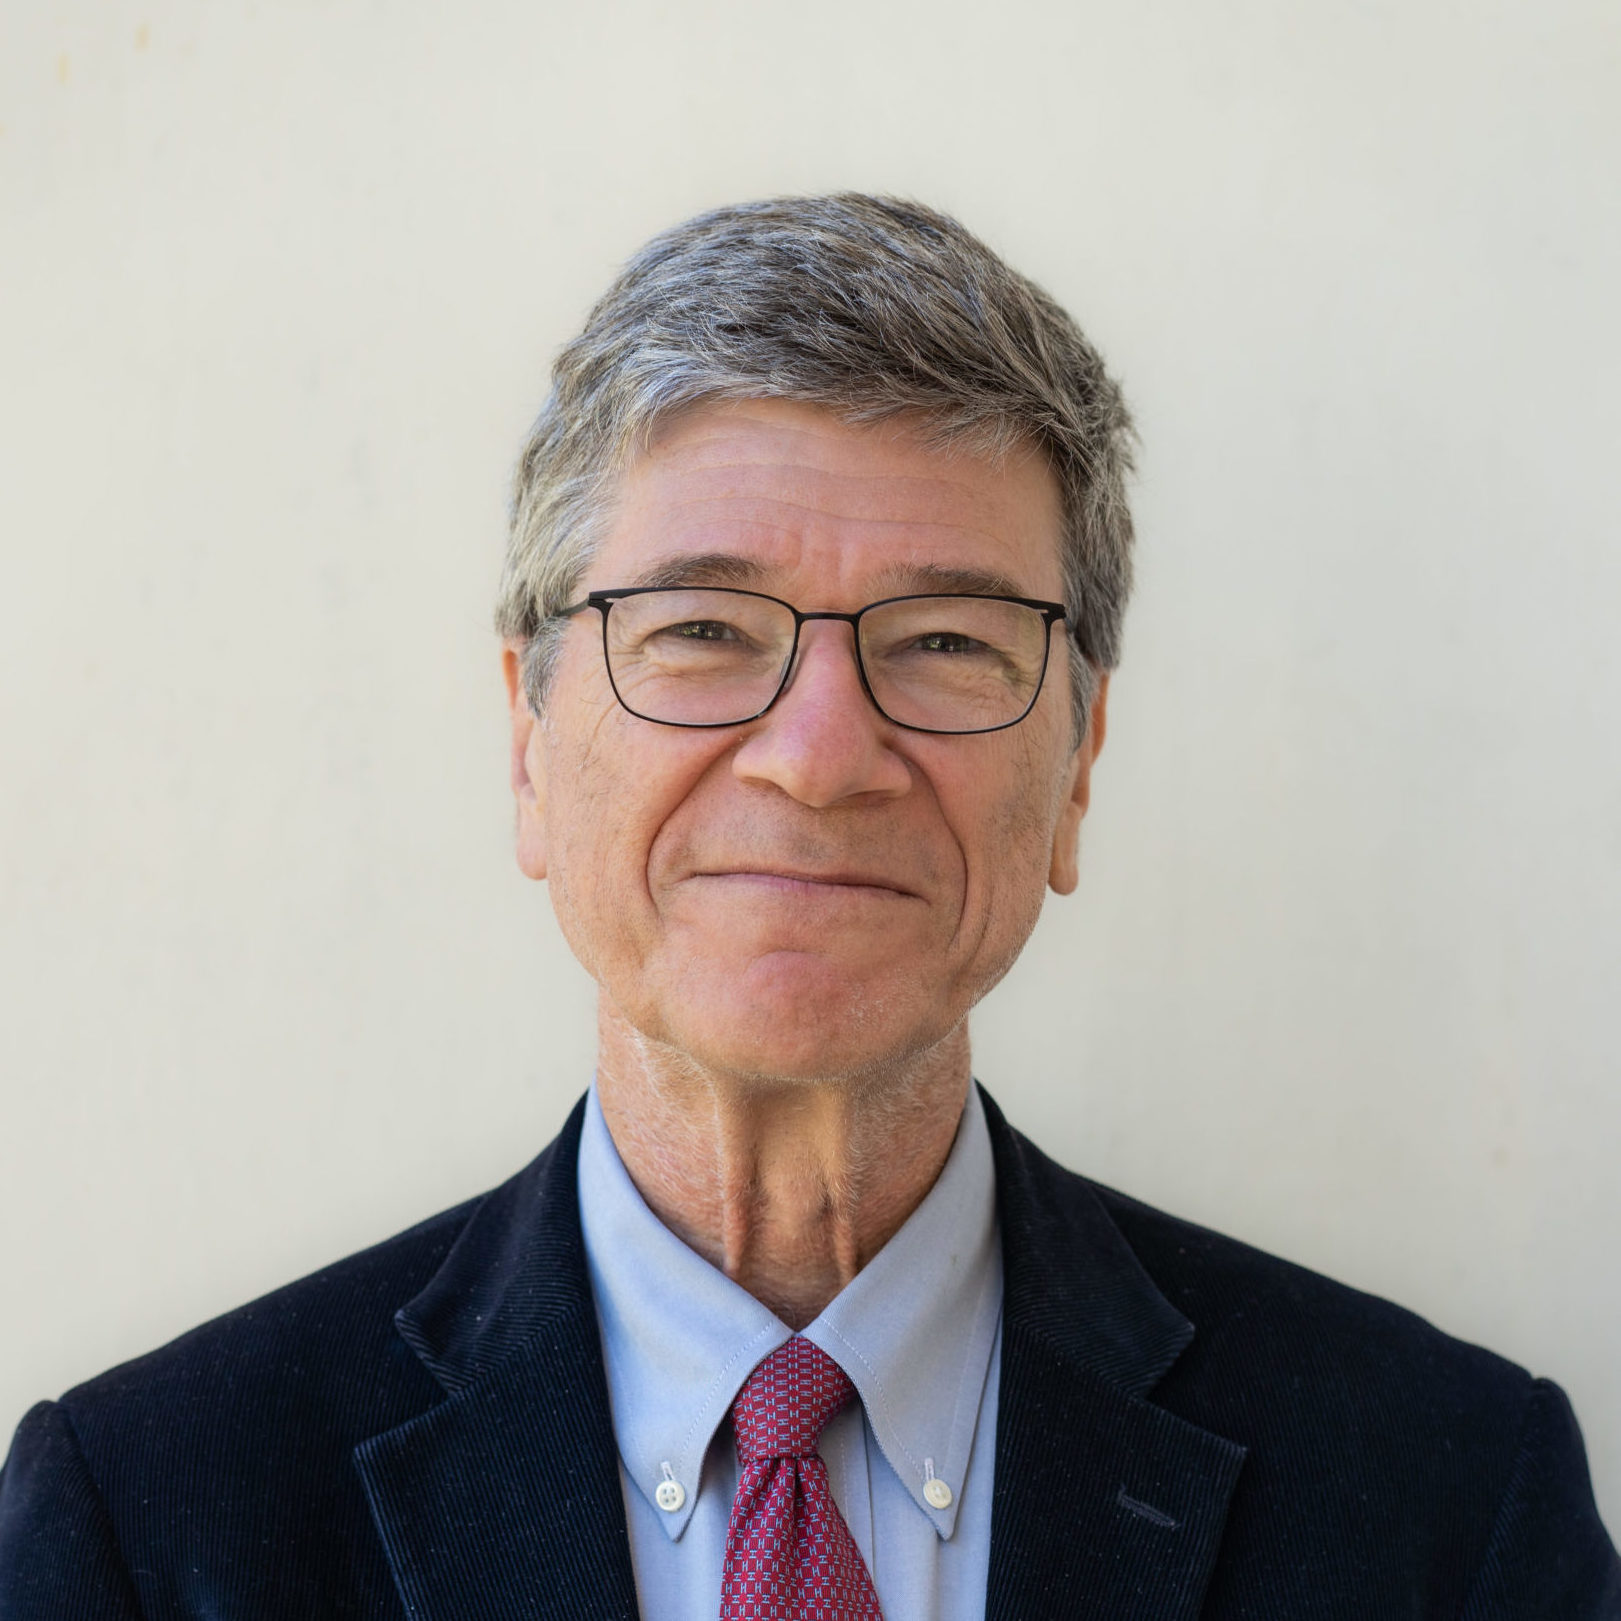 Join Prof. Jeffrey Sachs